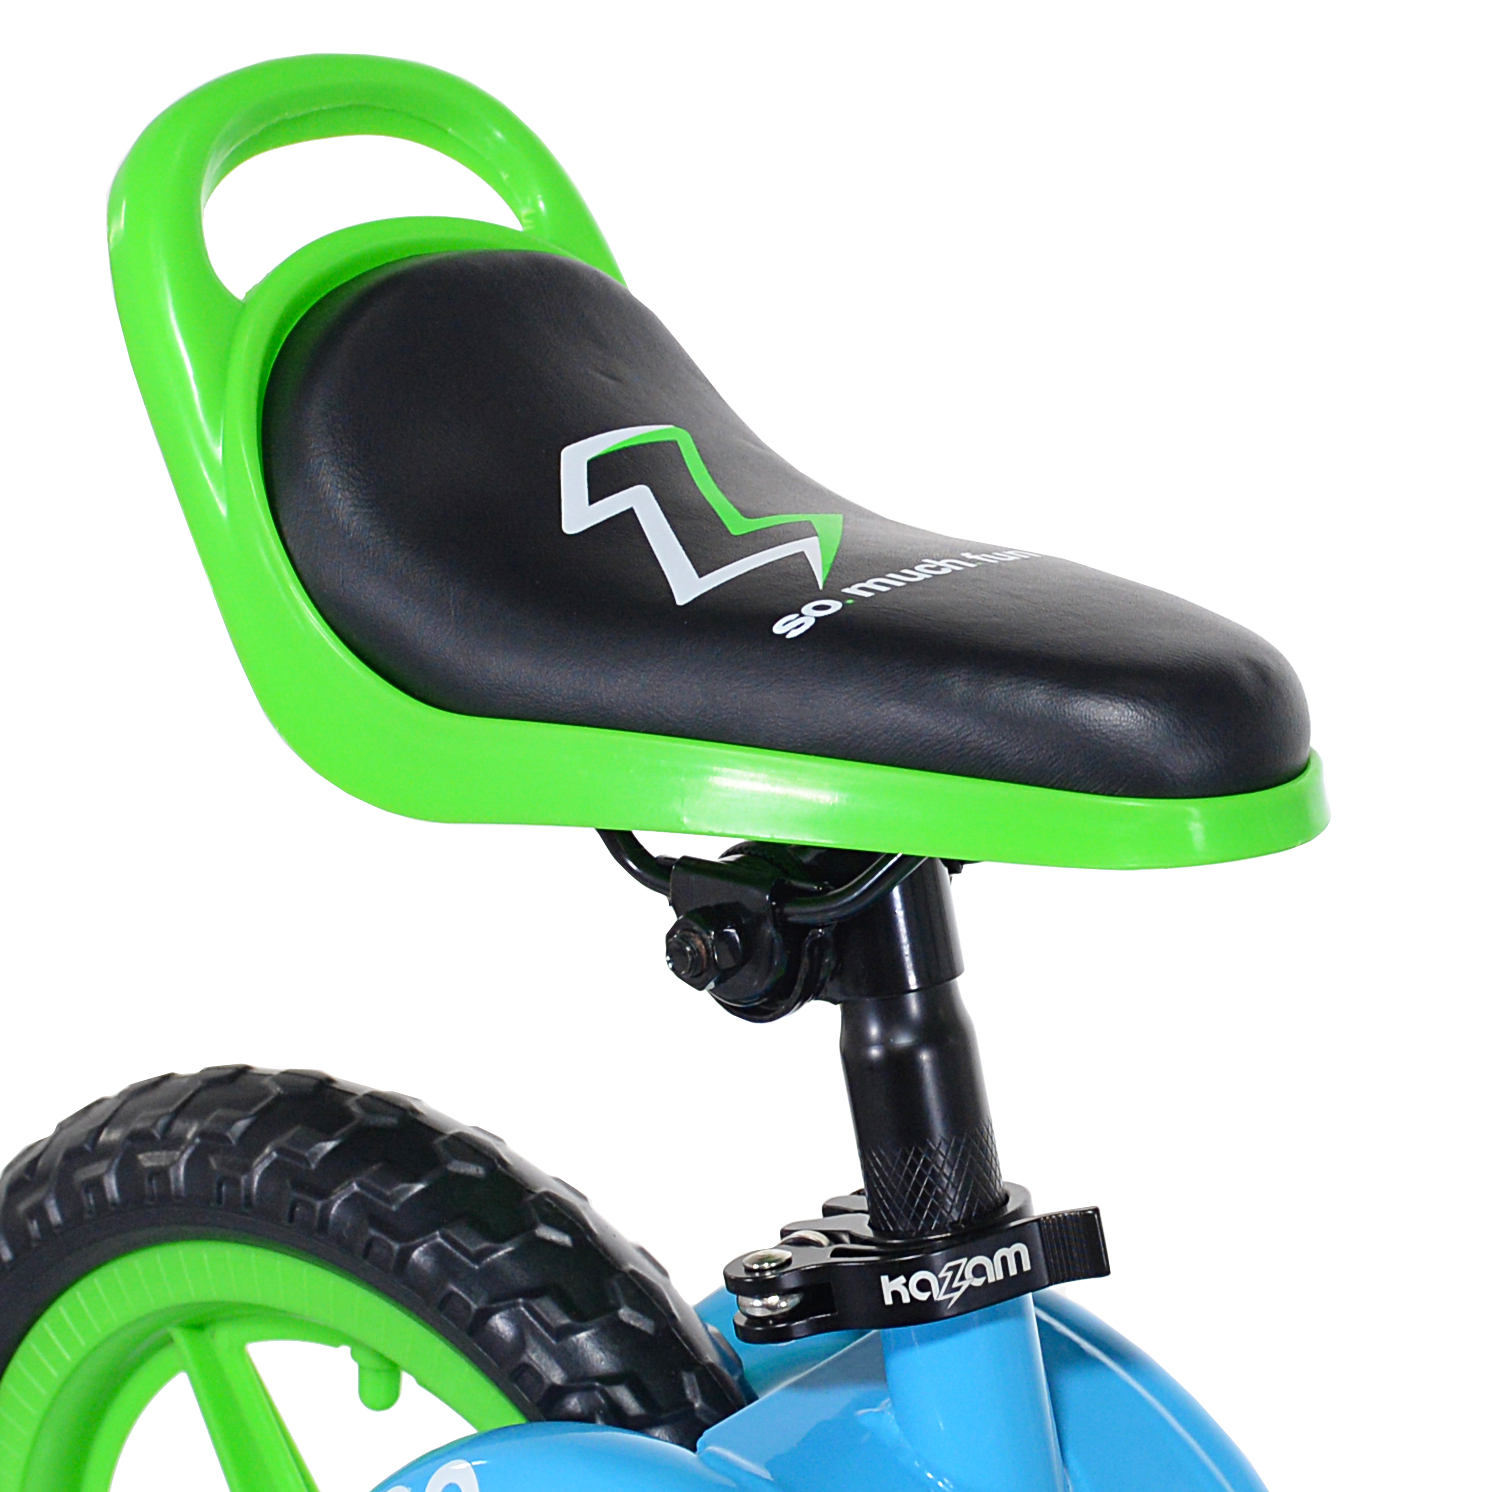 KaZAM 12" Child's Balance Bike and Helmet, Green/Blue - image 5 of 9